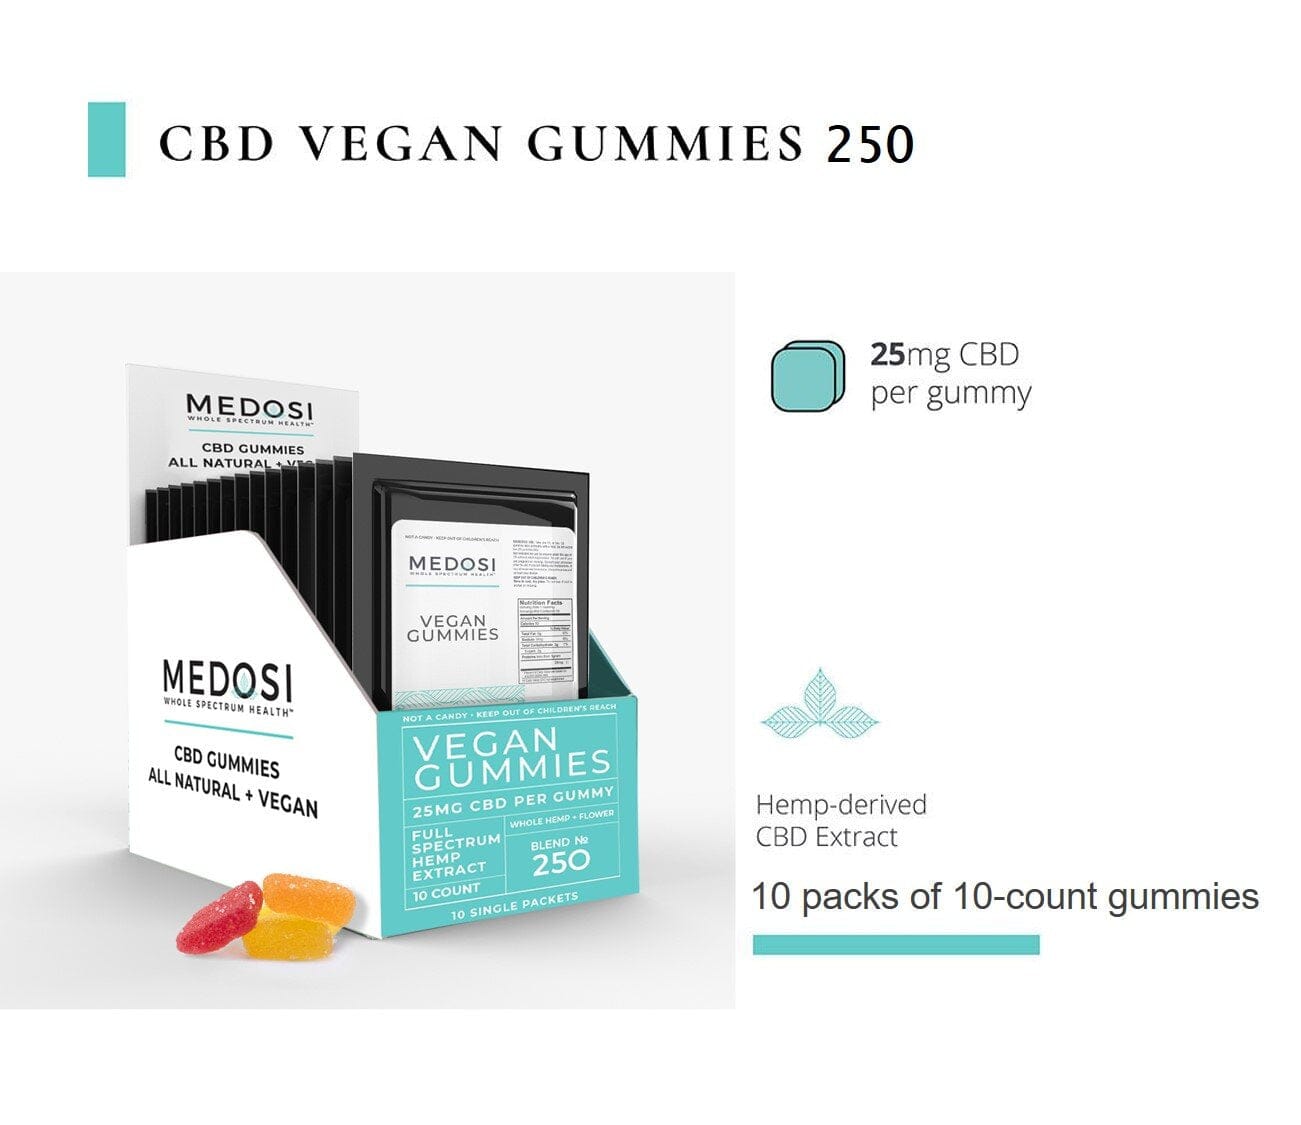 MEDOSI CBD Vegan Gummies 250mg (Retail Display - 10pk)